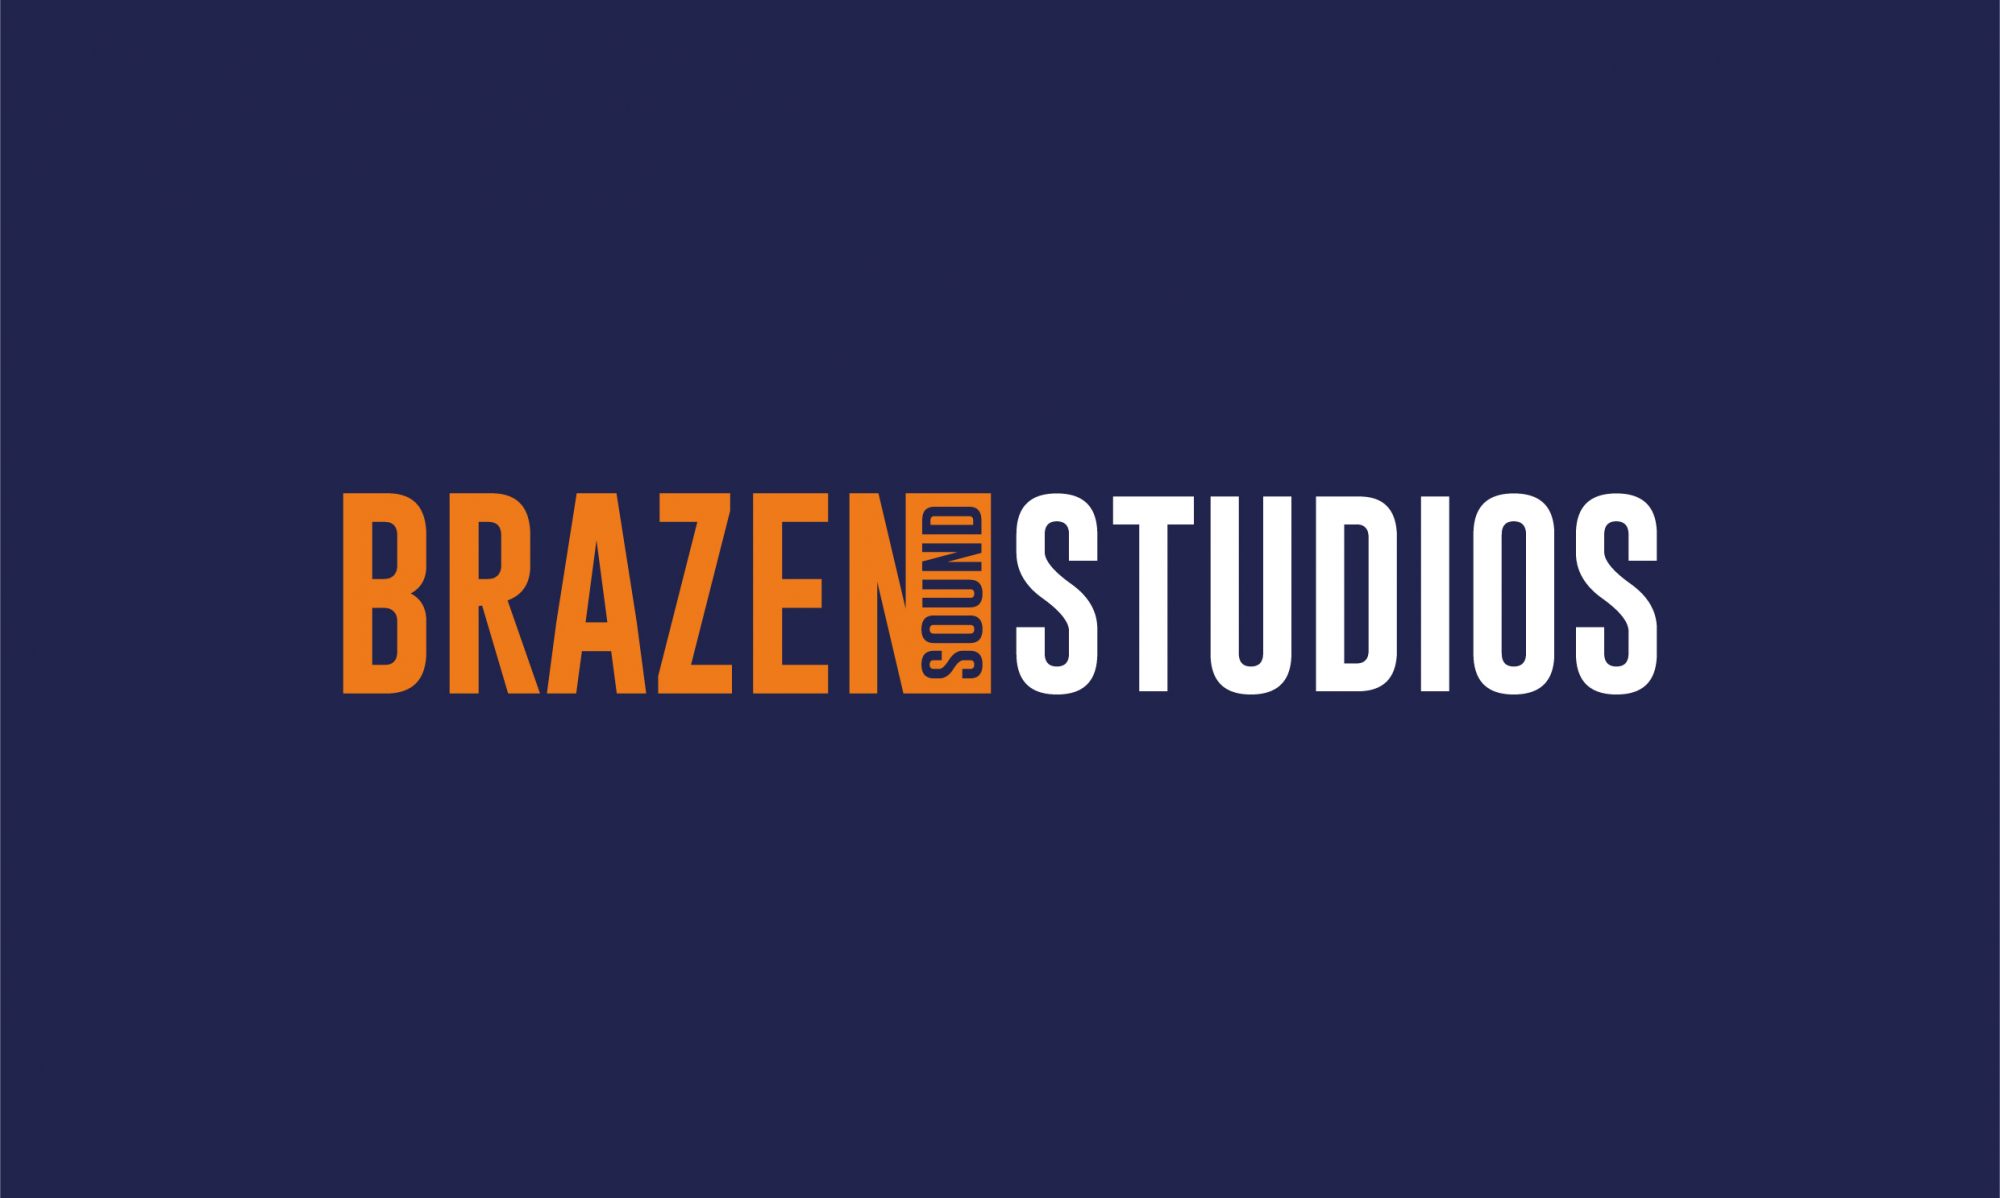 Brazen Sound Studio Blog